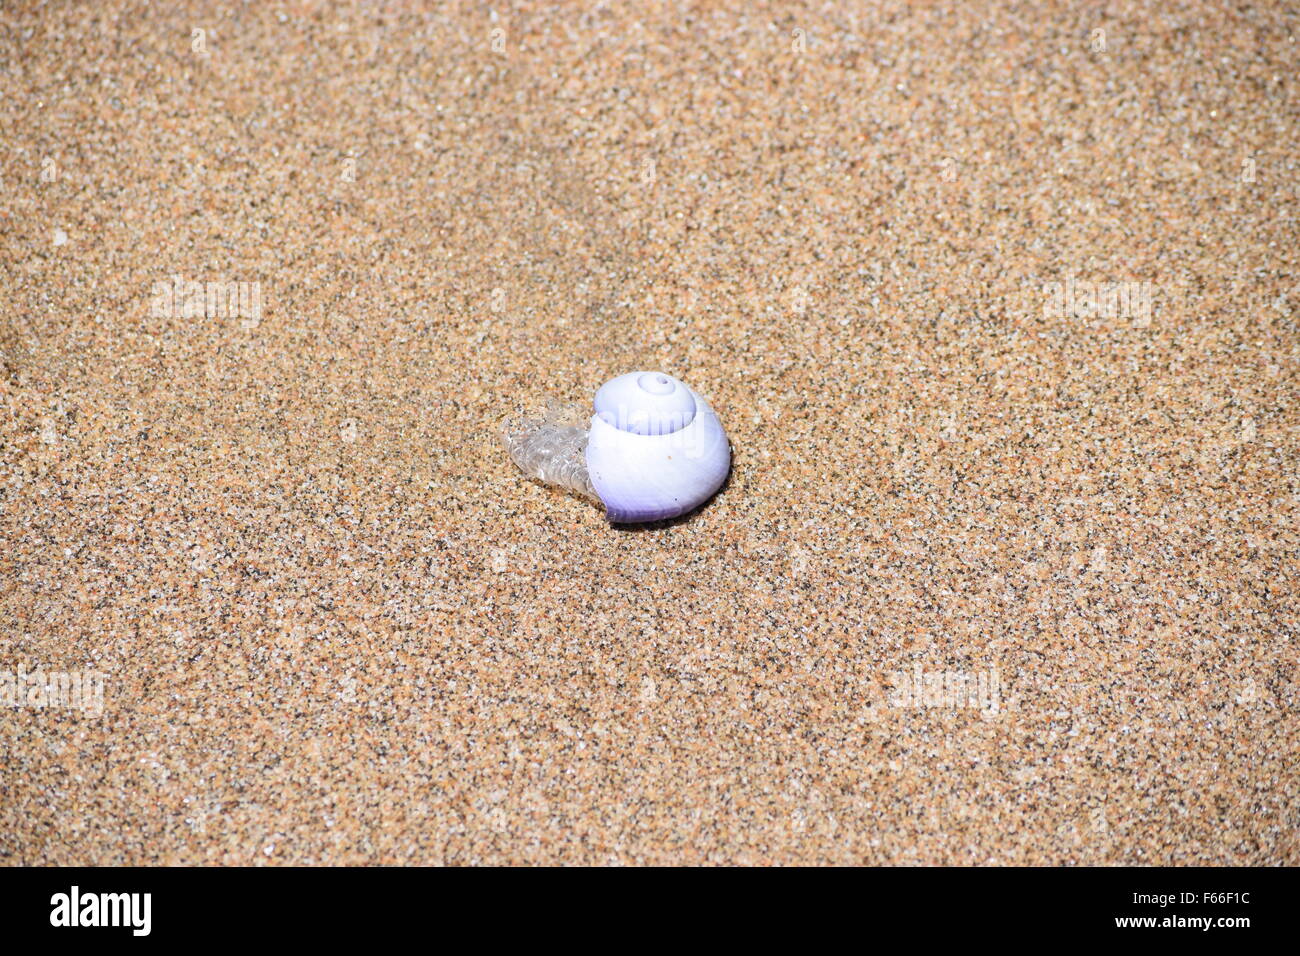 unknown sea snail type creature found on the beach on Australia's east coast Stock Photo